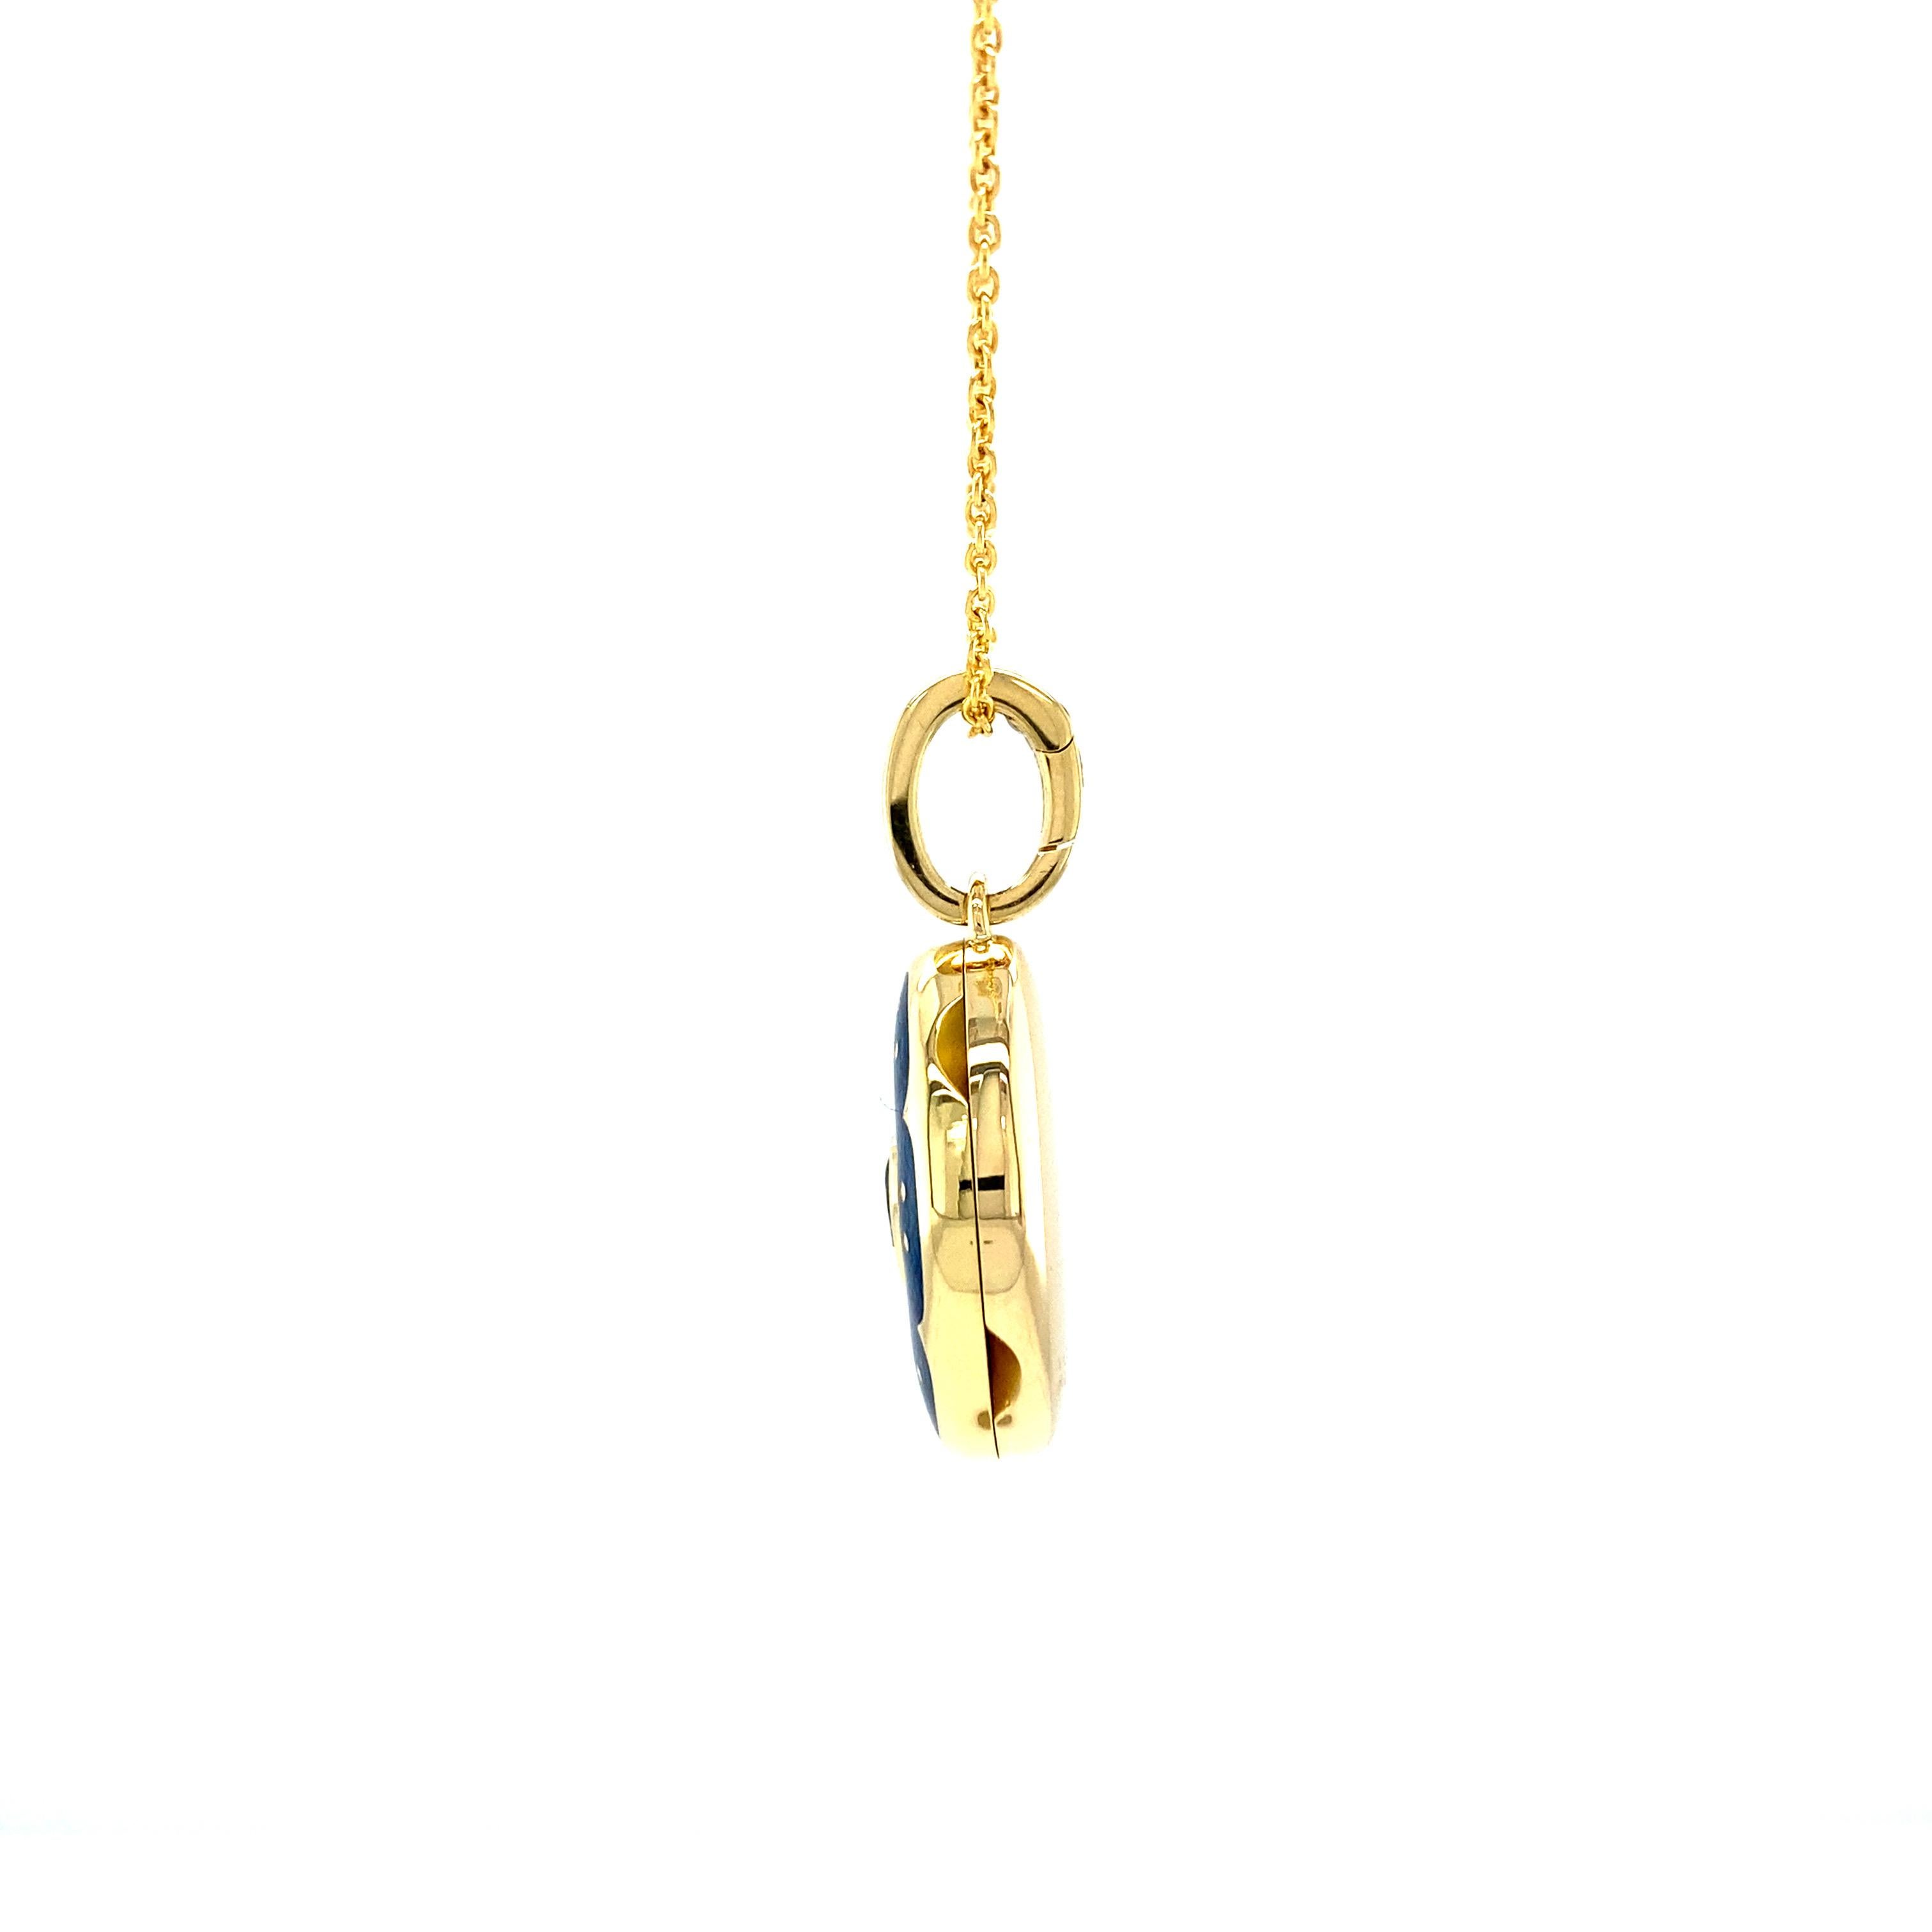  Oval Locket Pendant Necklace - 18k Yellow Gold - Blue Enamel - 1 Sapphire For Sale 3